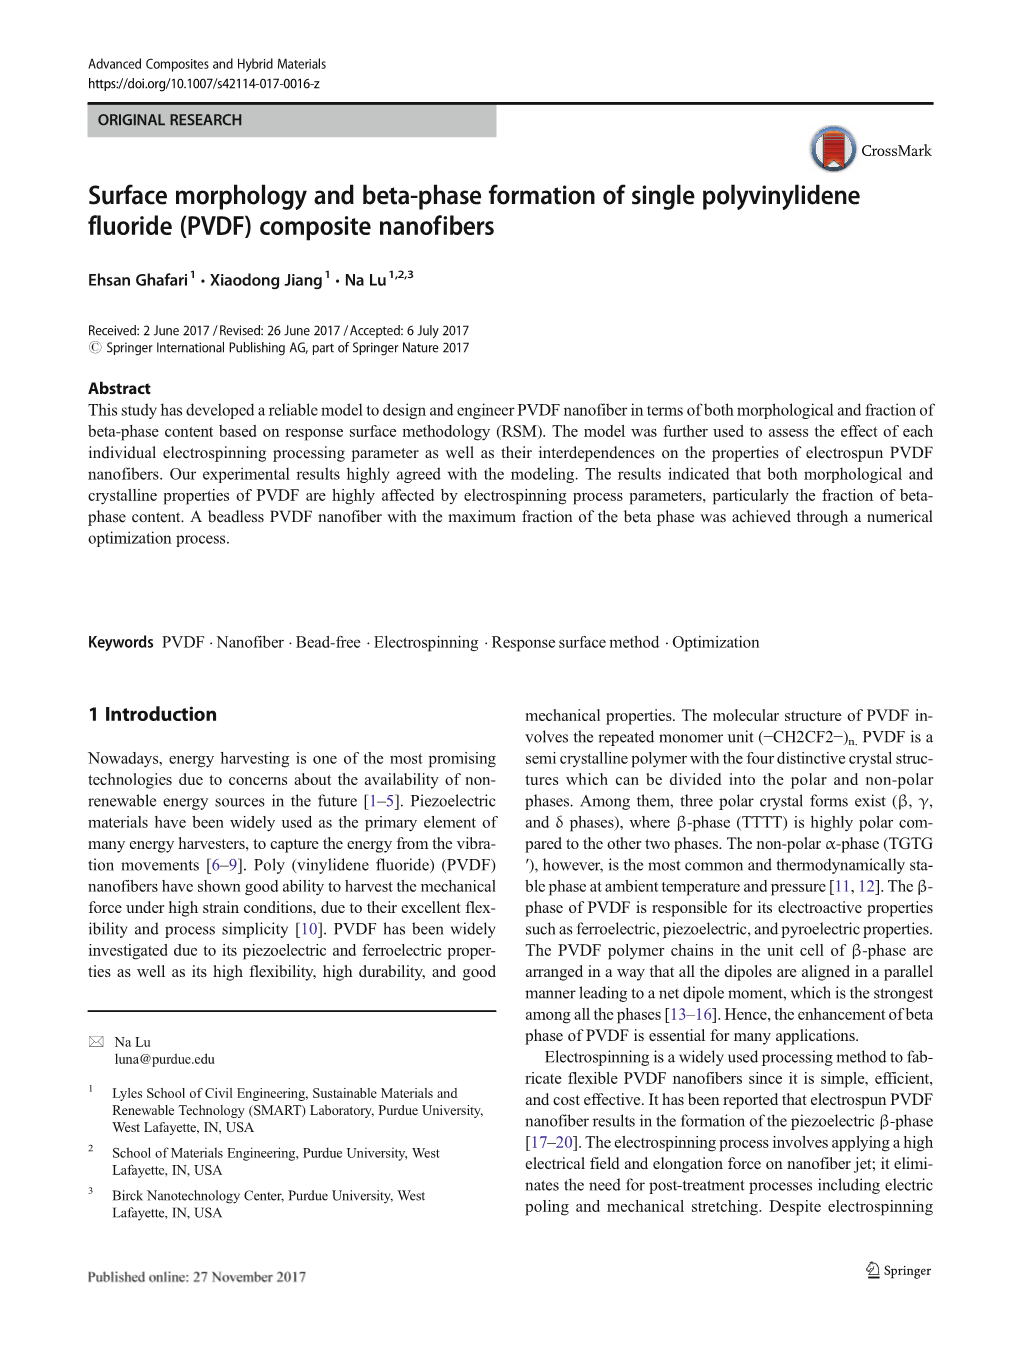 Surface Morphology and Beta-Phase Formation of Single Polyvinylidene Fluoride (PVDF) Composite Nanofibers